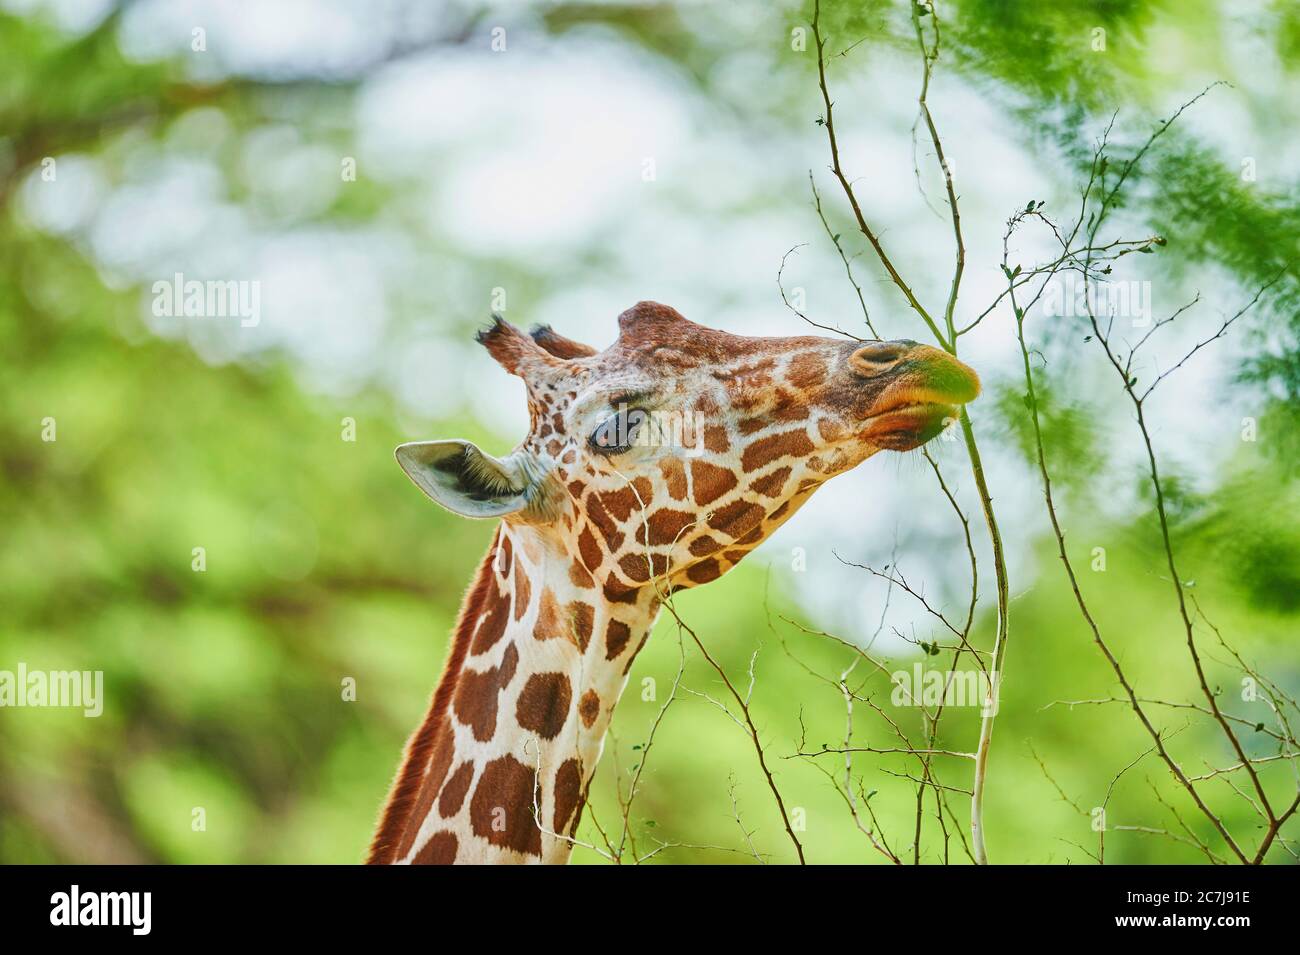 Girafe réticulée (Giraffa camelopardalis reticulata), portrait, Afrique Banque D'Images